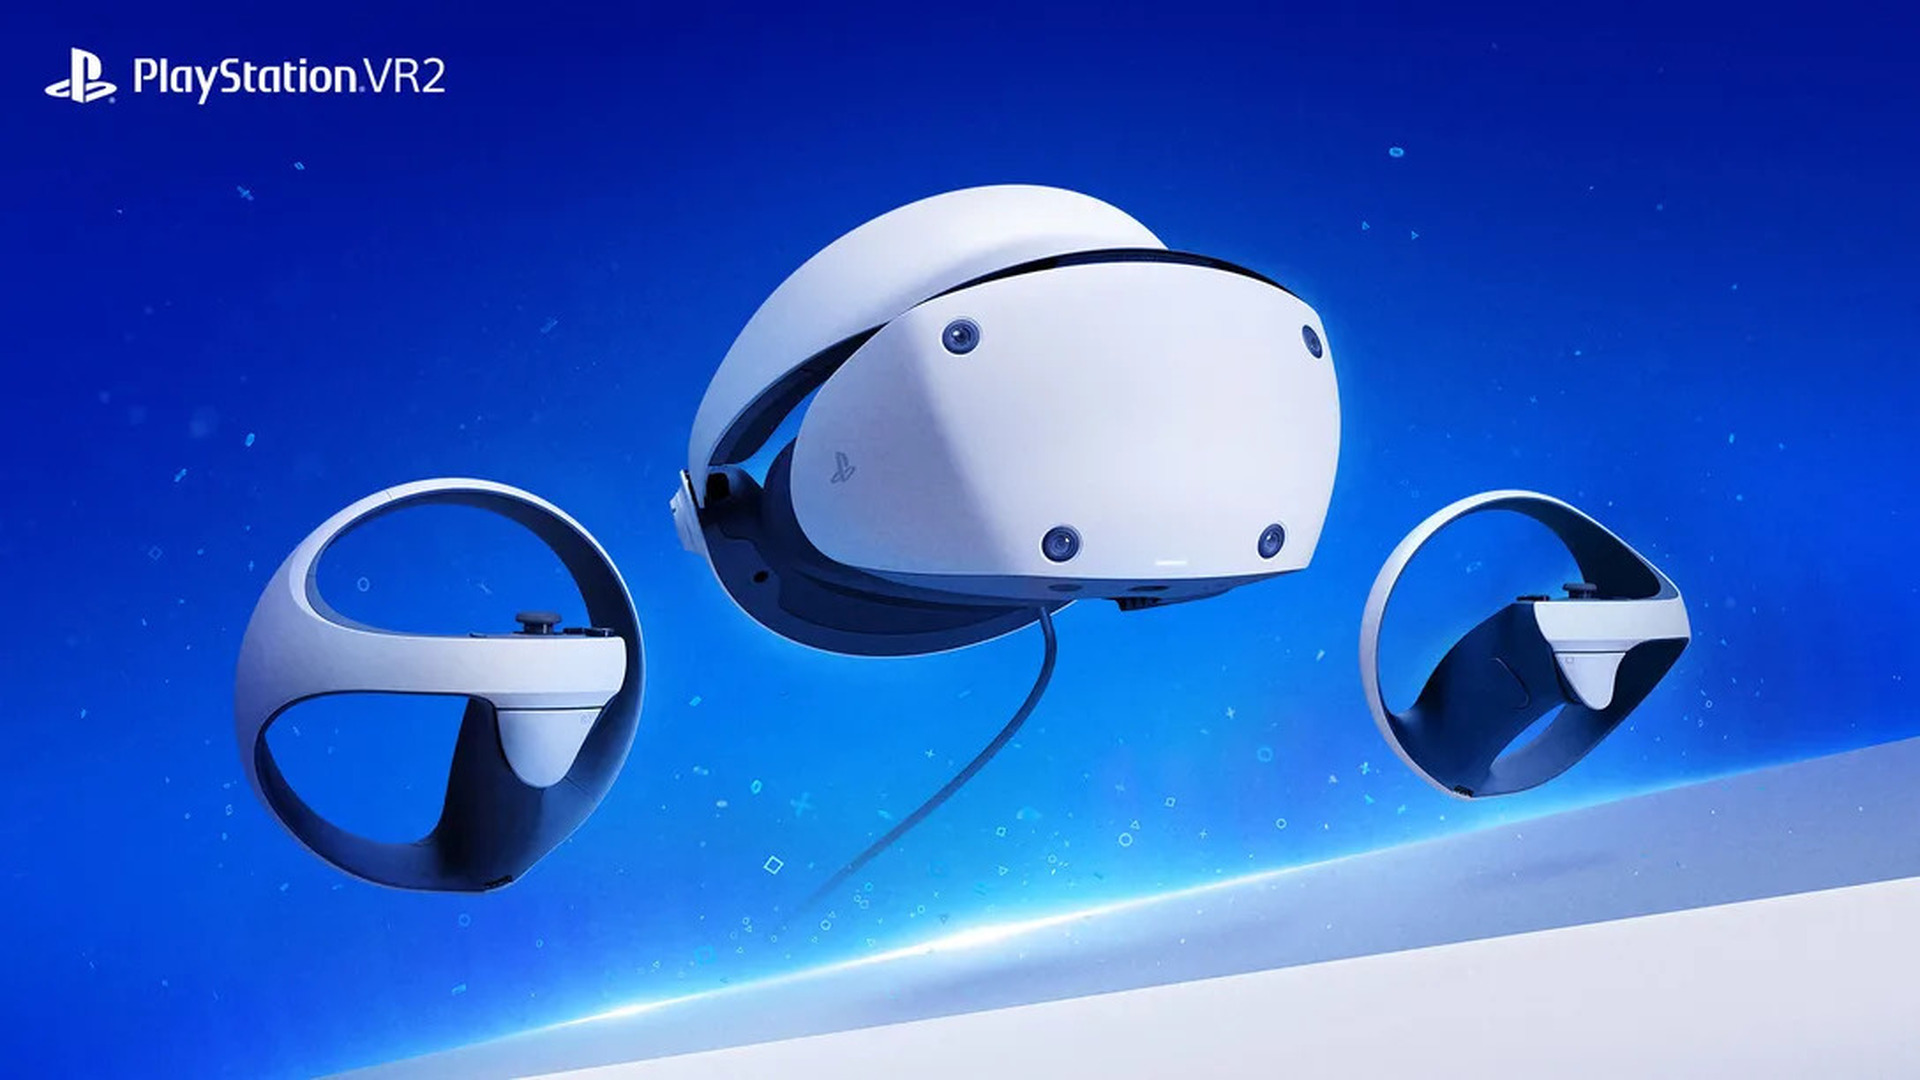 PS VR2付属ケーブルは約4.5m、徹底解説FAQ公開。開発中タイトル